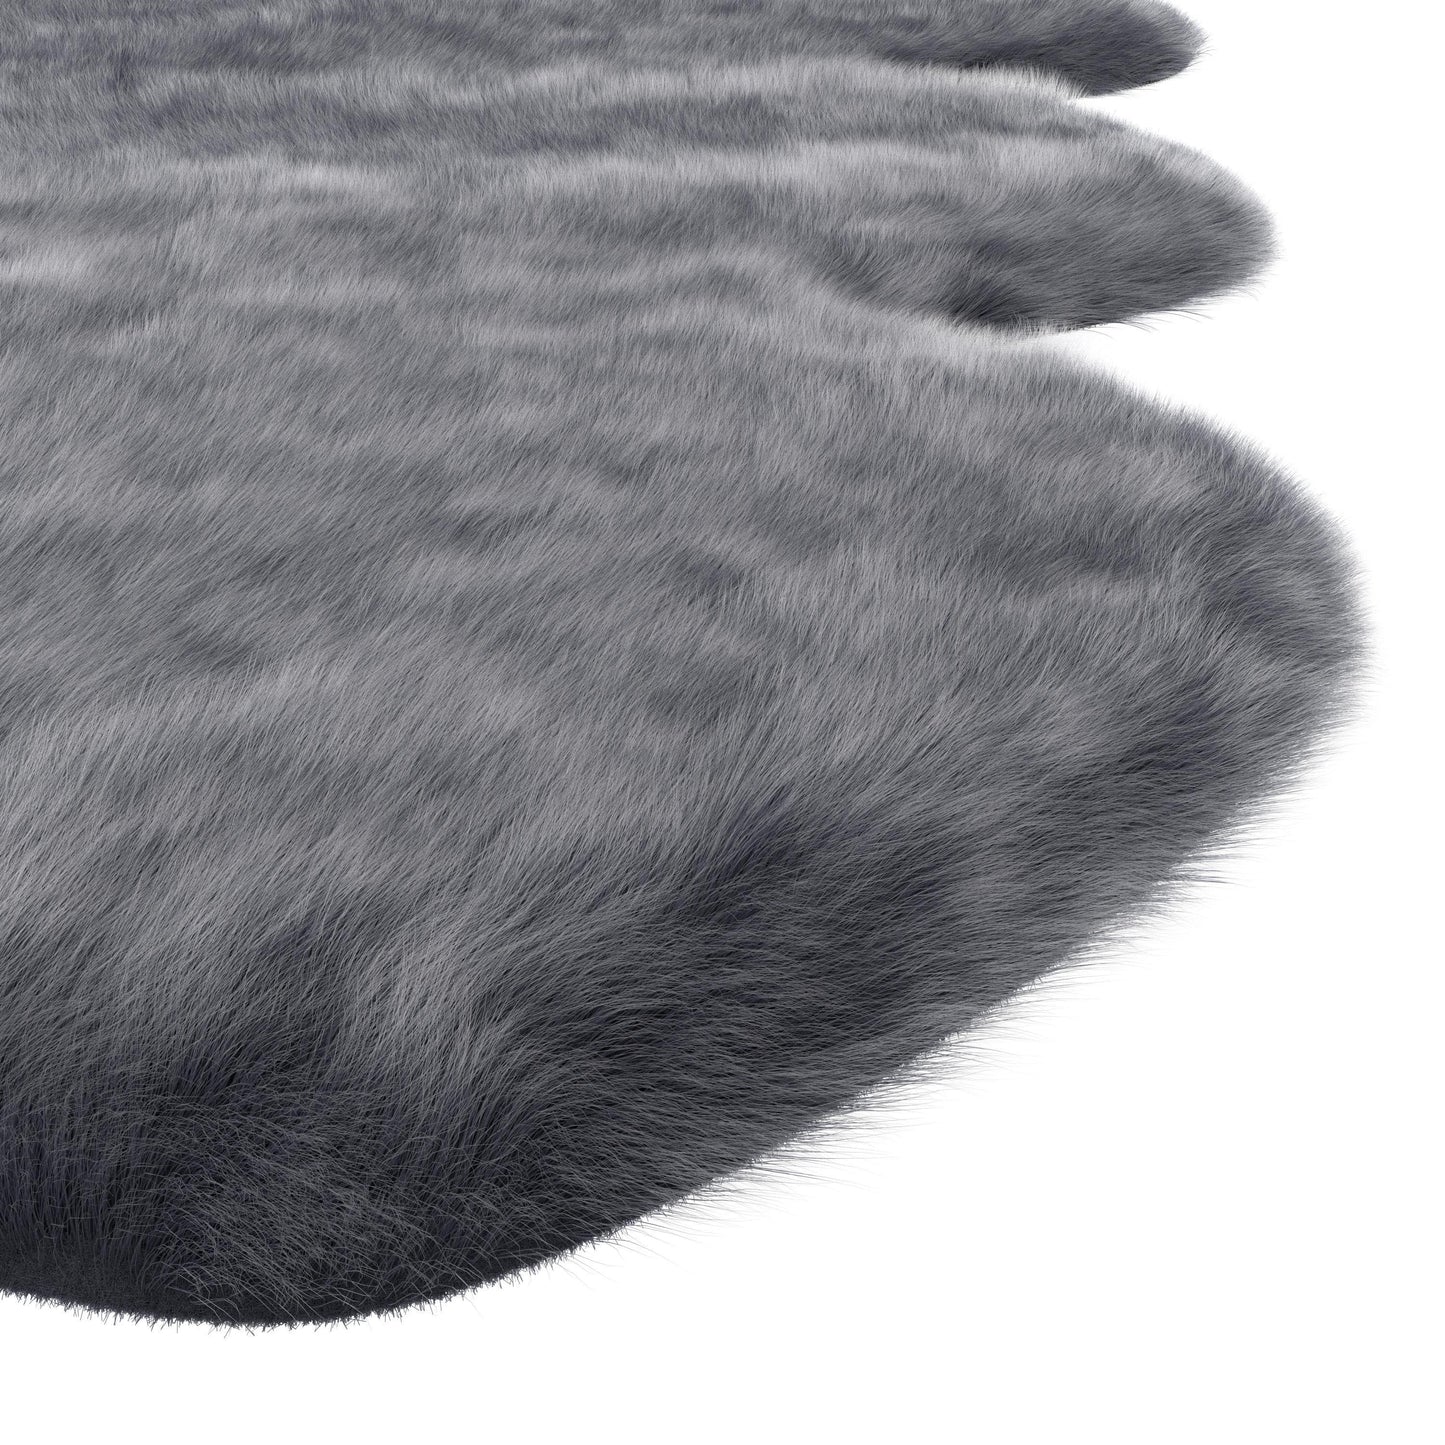 Black Faux Fur Area Rug 6x7.5